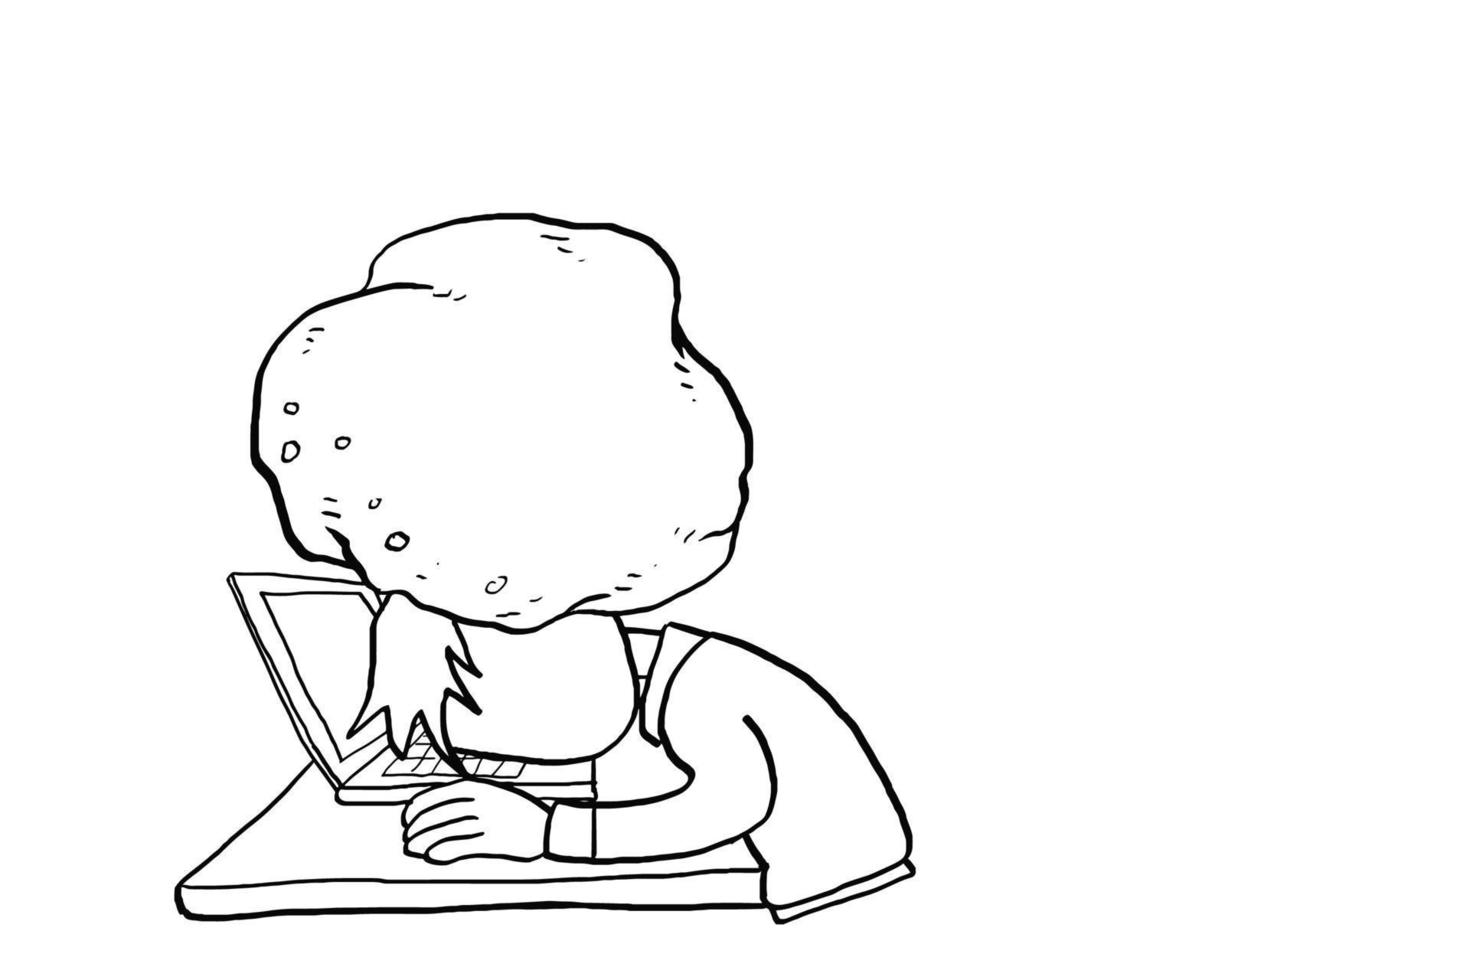 Office worker feeling pressure at work. His head squeezed between laptop and boulder of rock. Cartoon vector illustration program